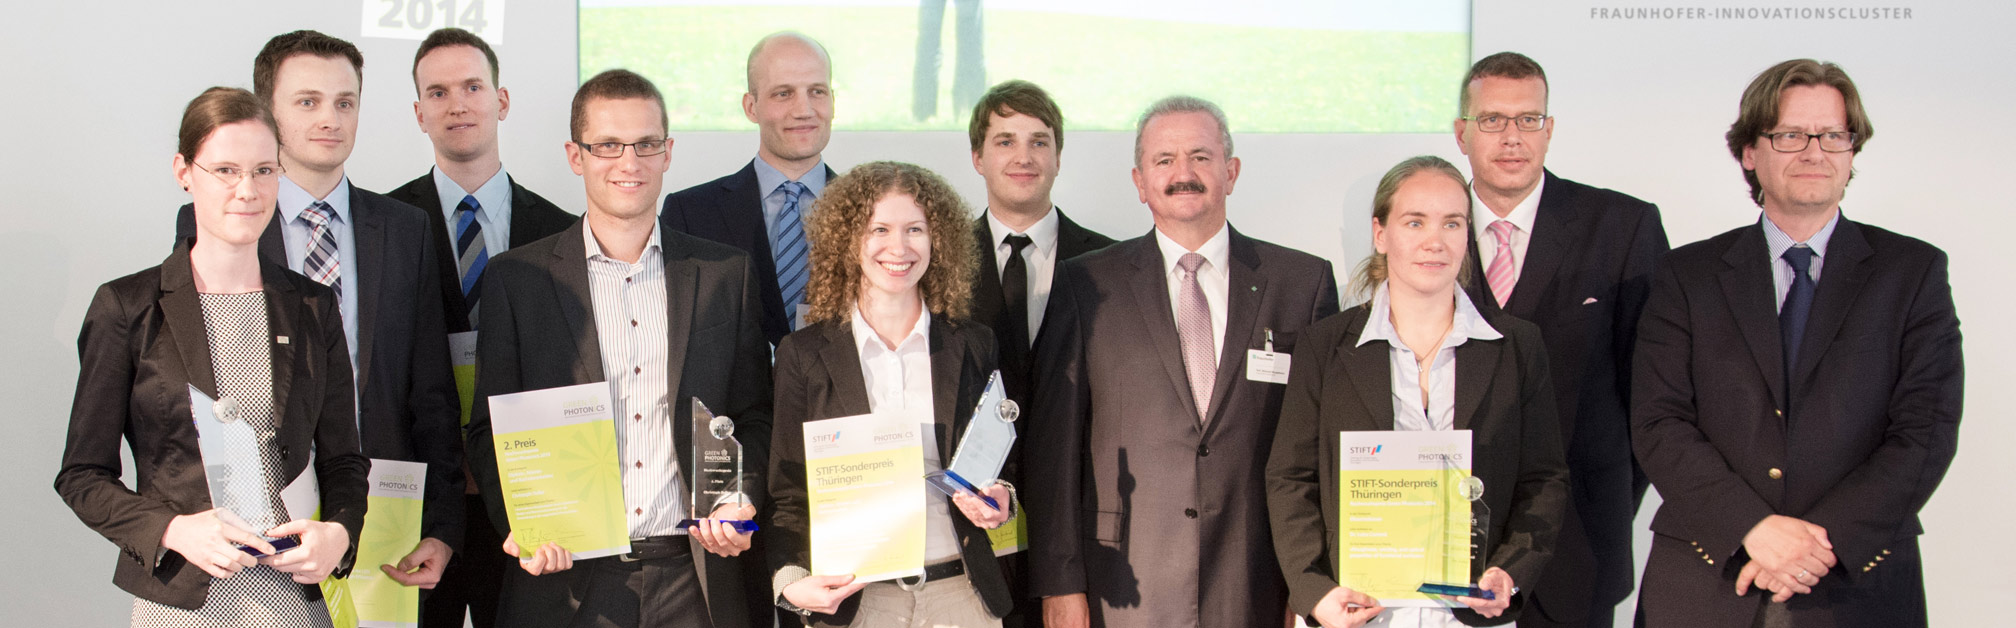 Nachwuchspreis Green Photonics Gewinner 2014